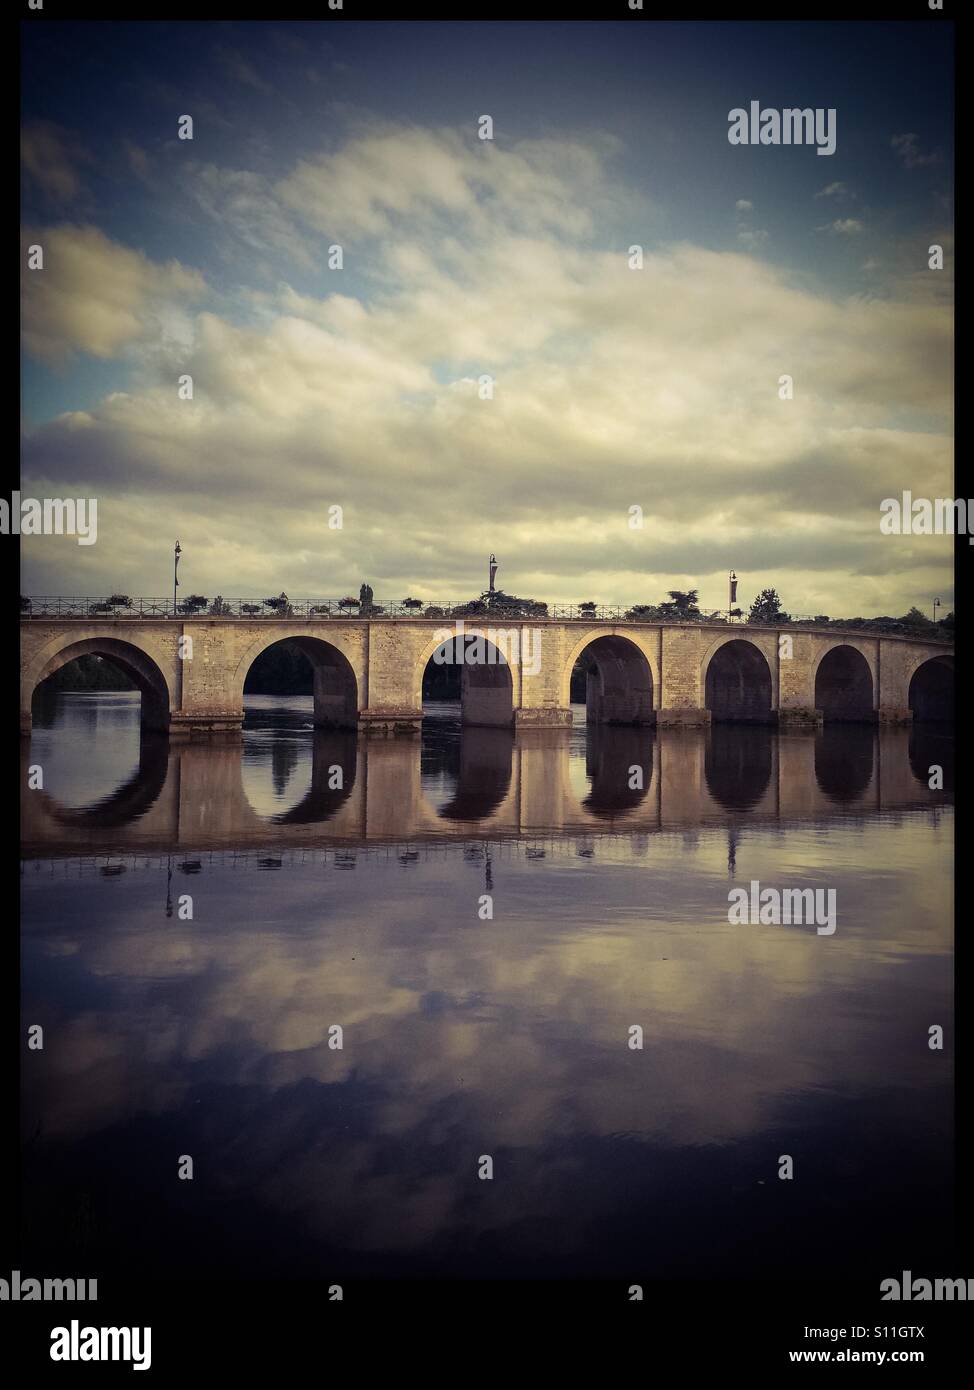 Bridge with reflection. Stock Photo